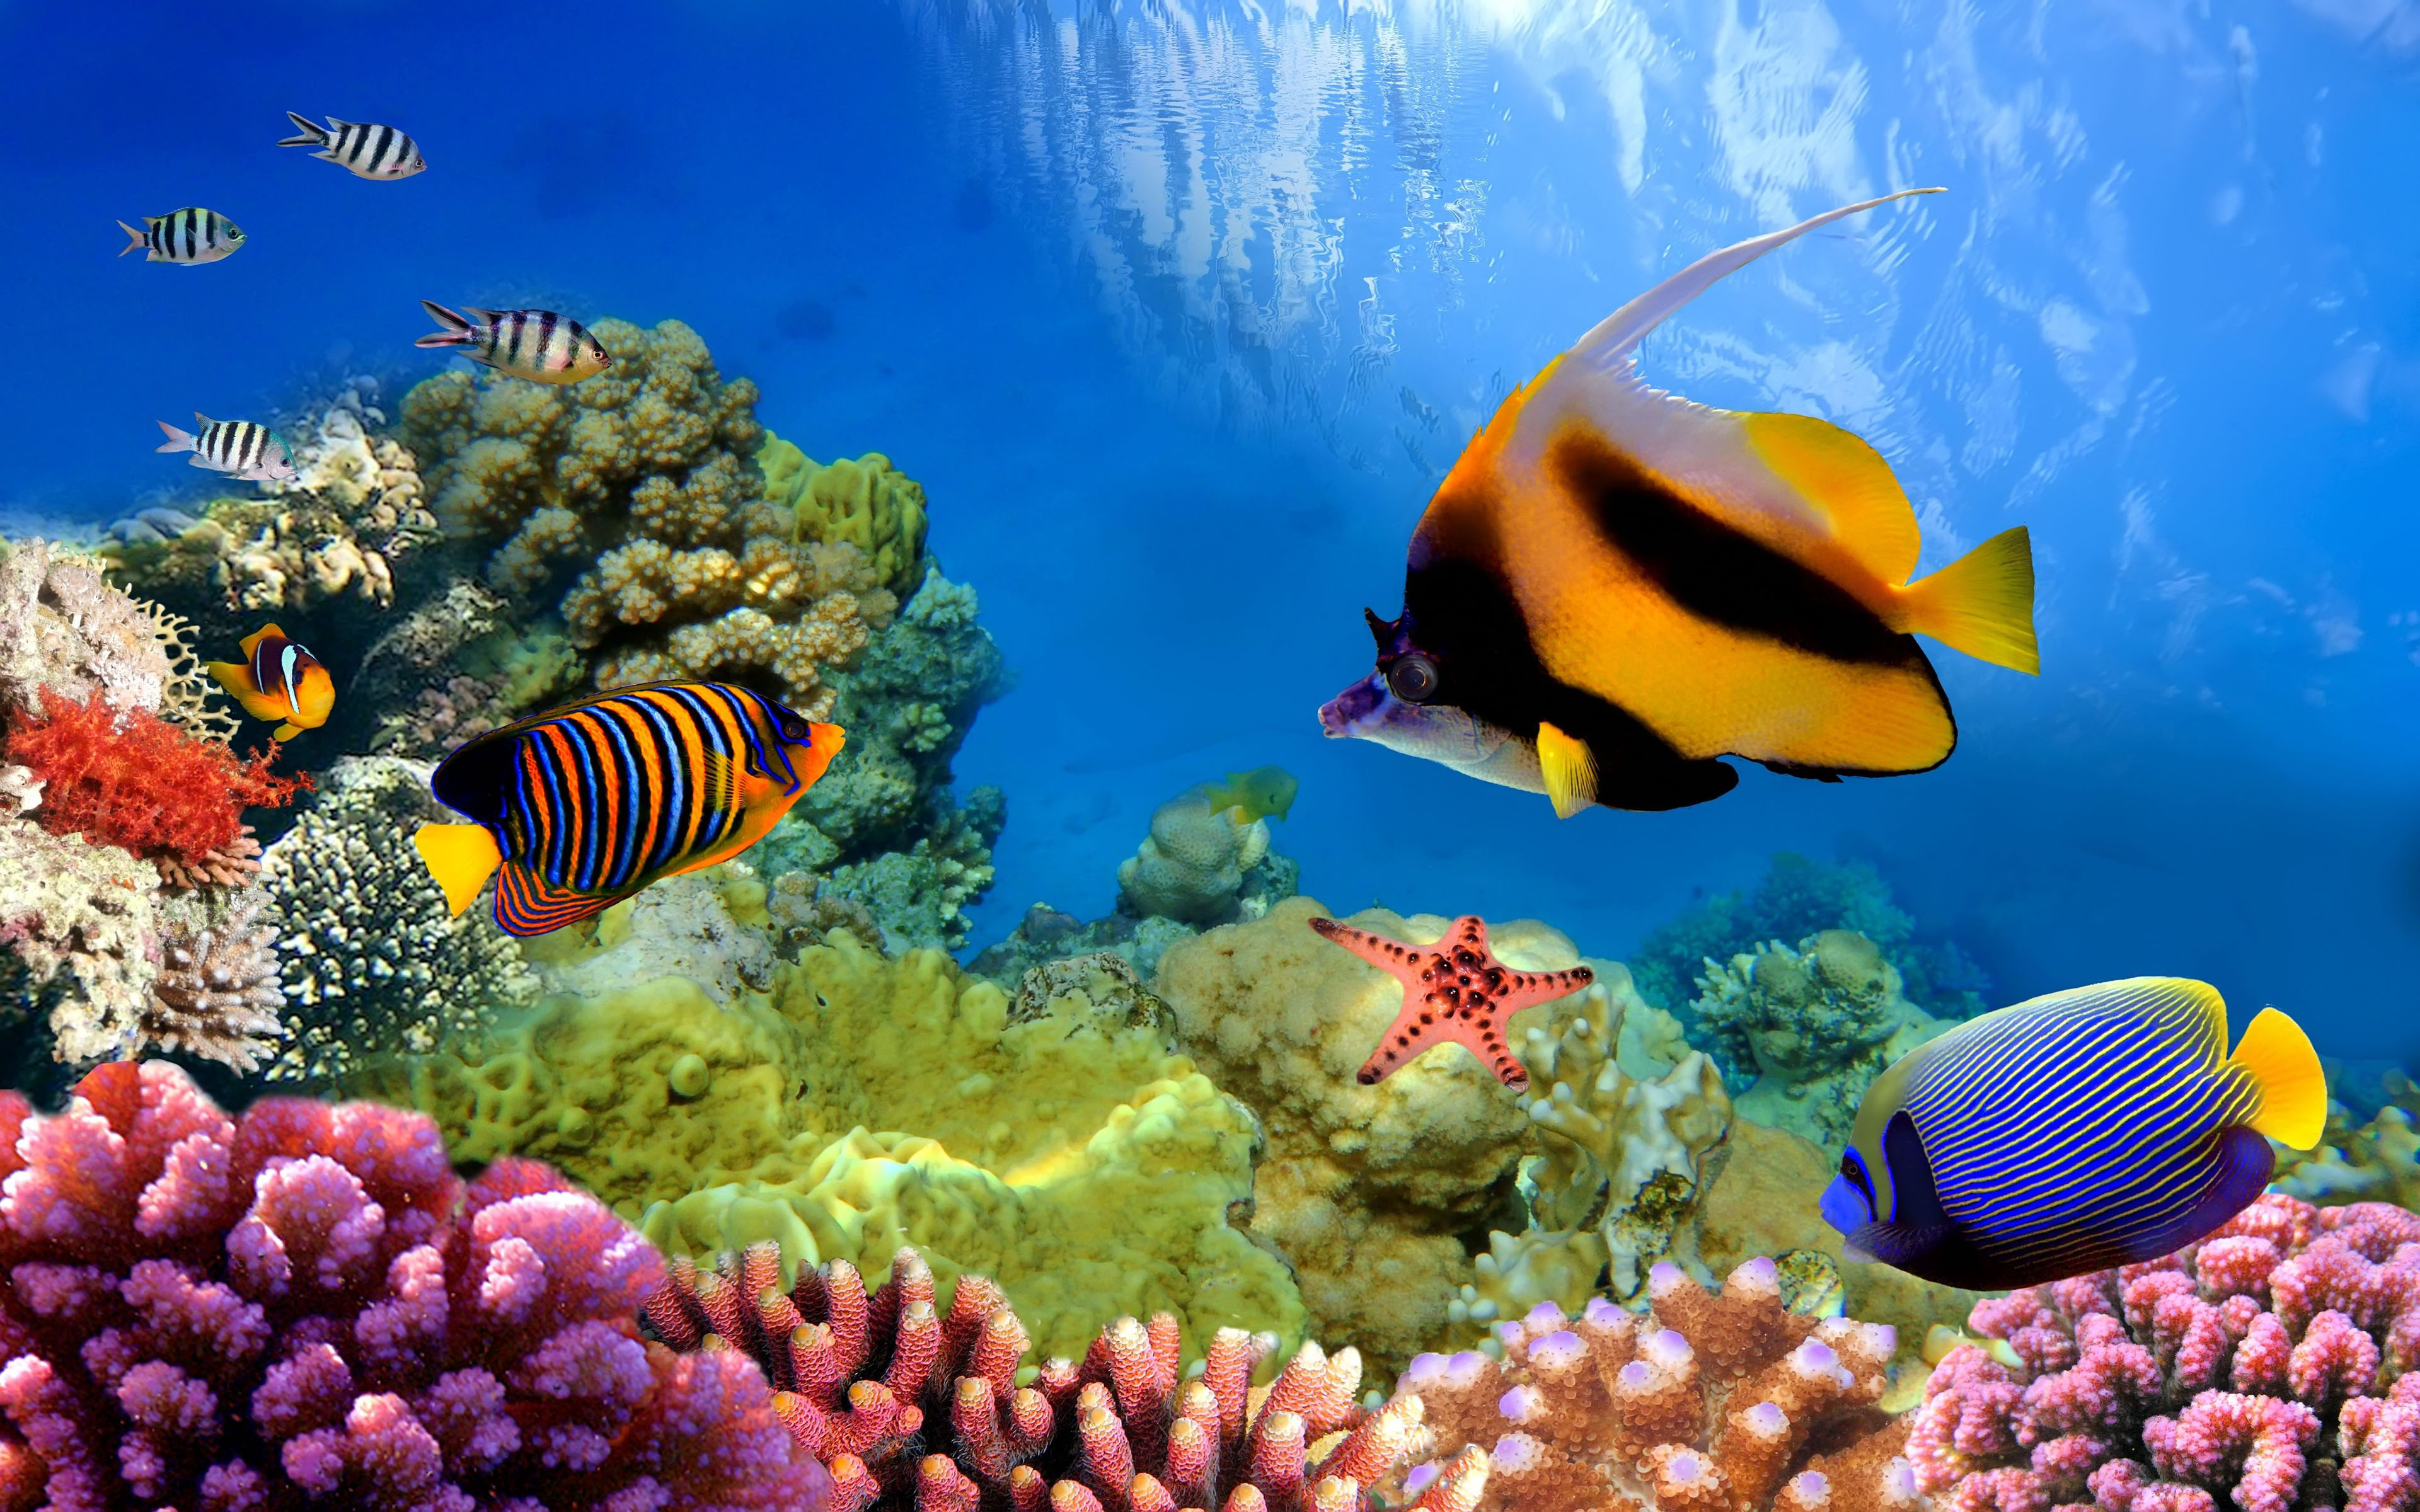 Underwater in the Great Barrier Reef